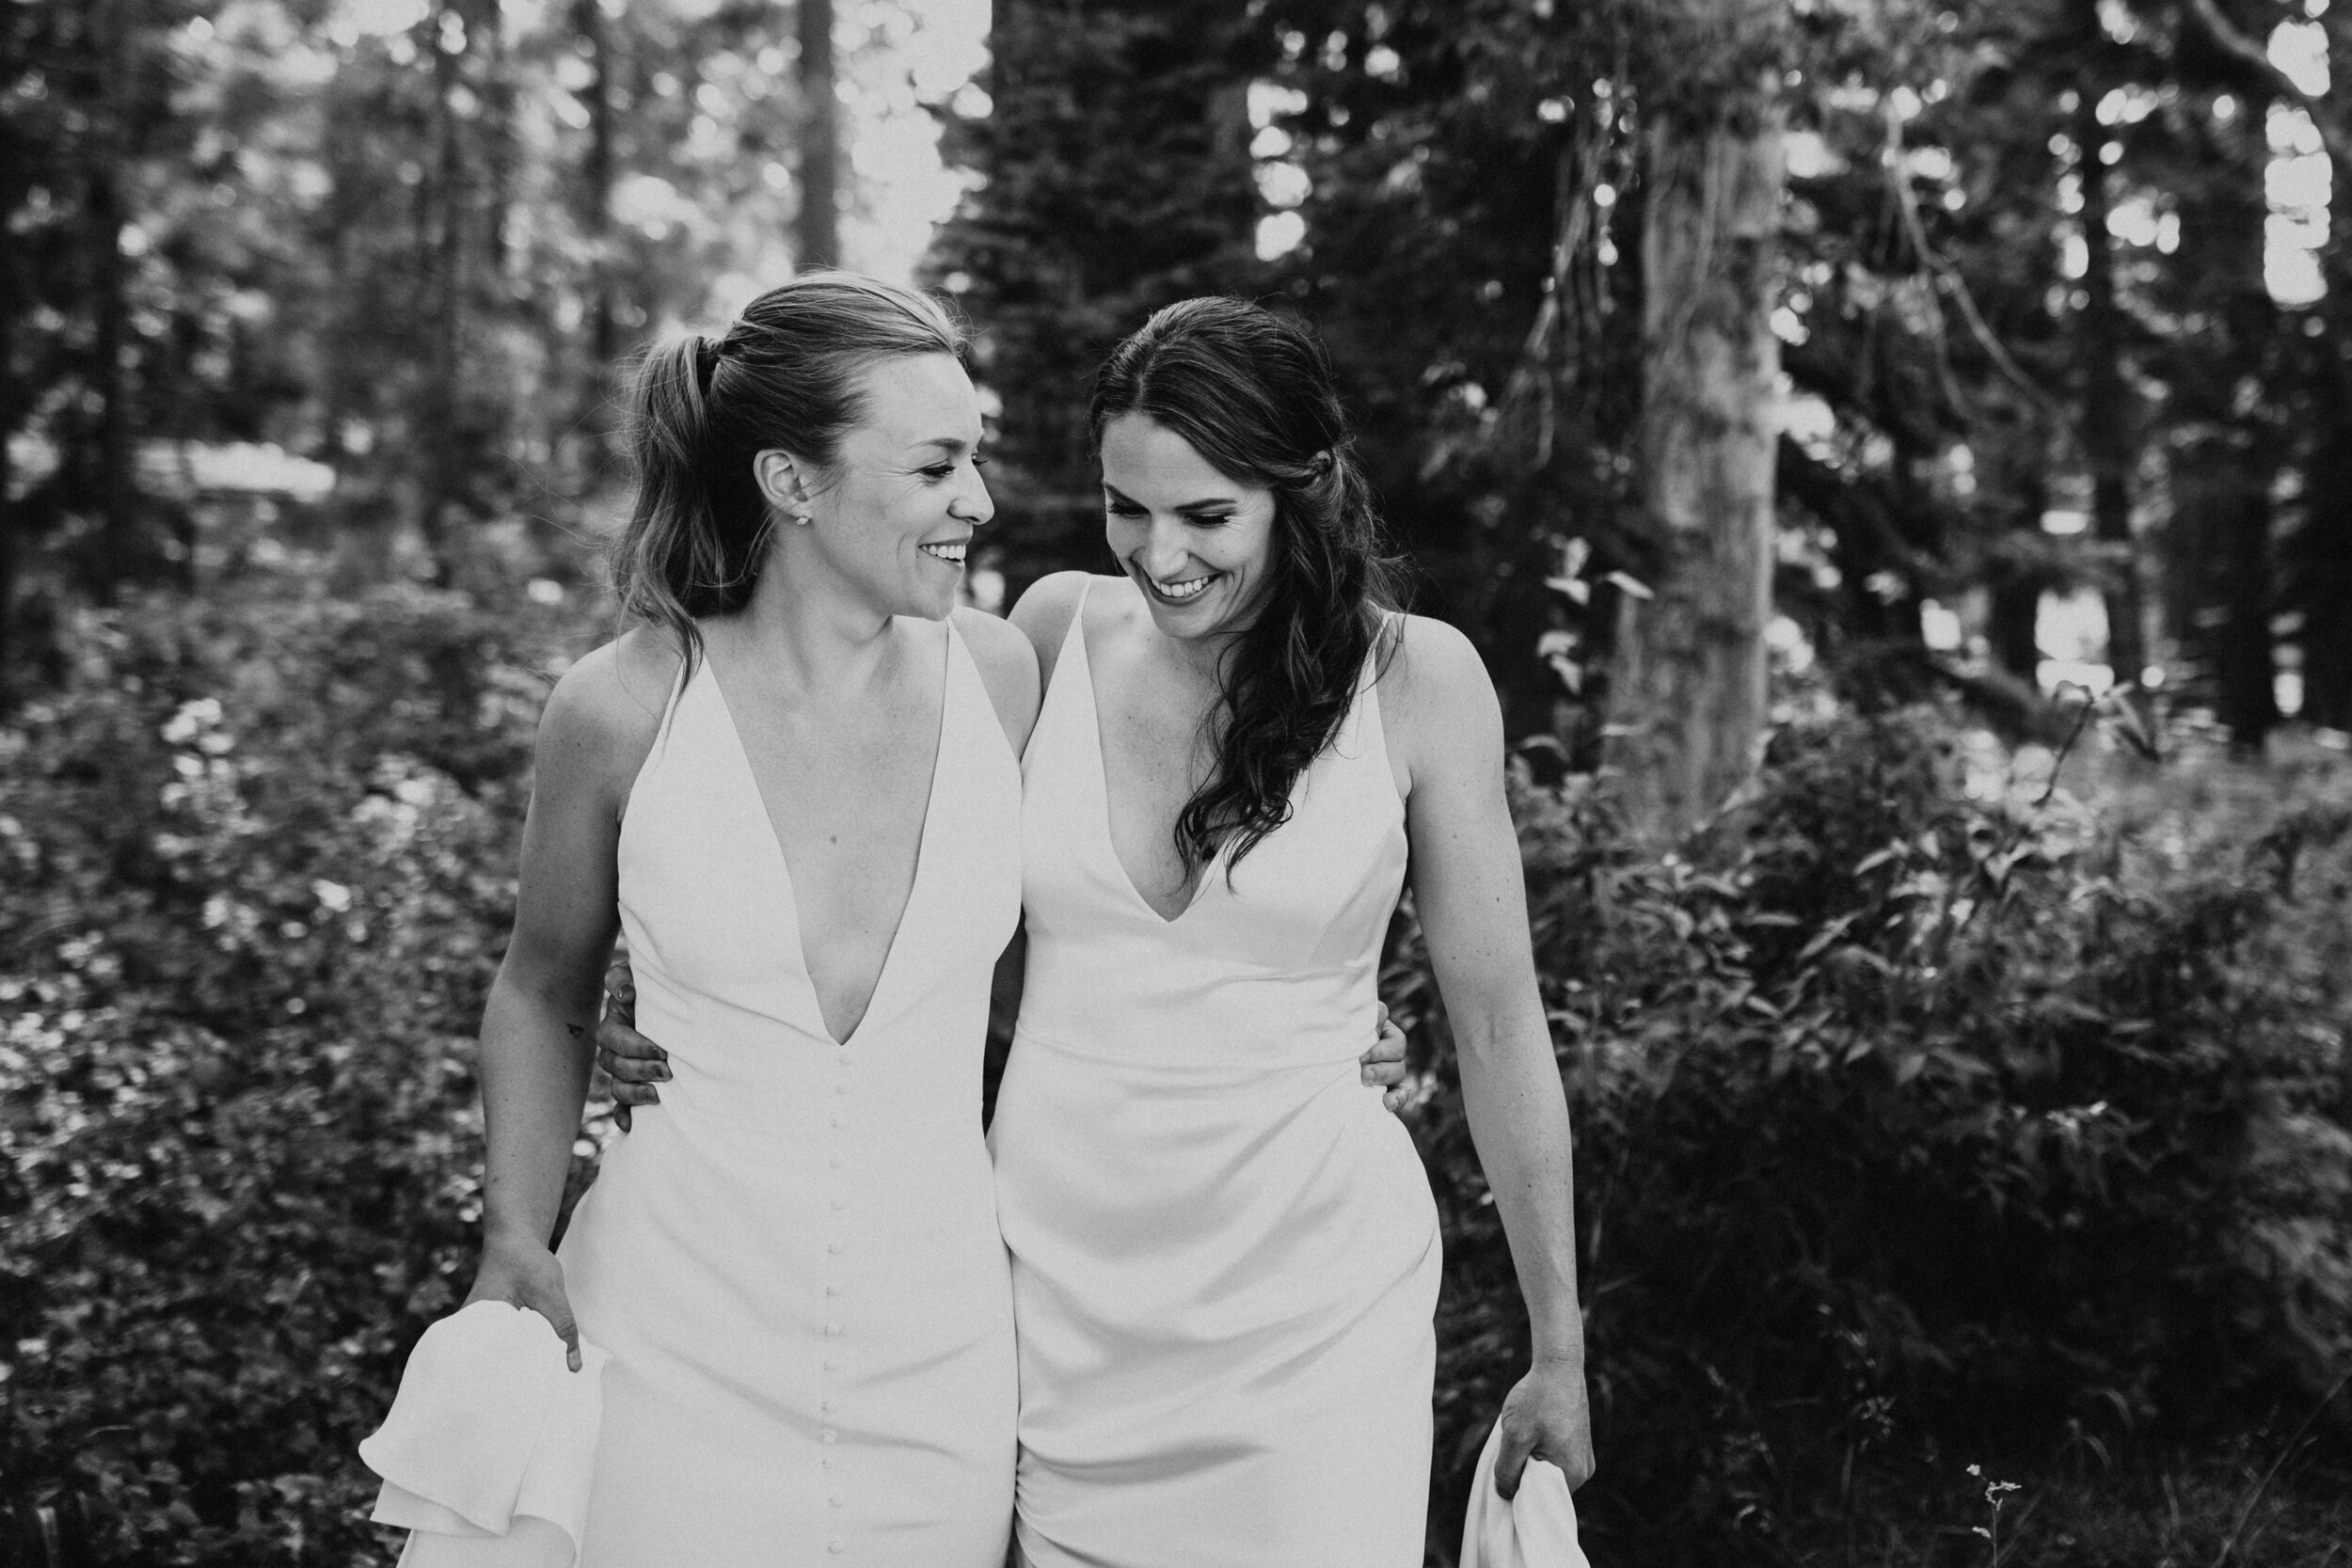  Sara and Leslie Lake Tahoe wedding in Alexandra Grecco Wedding Dresses 